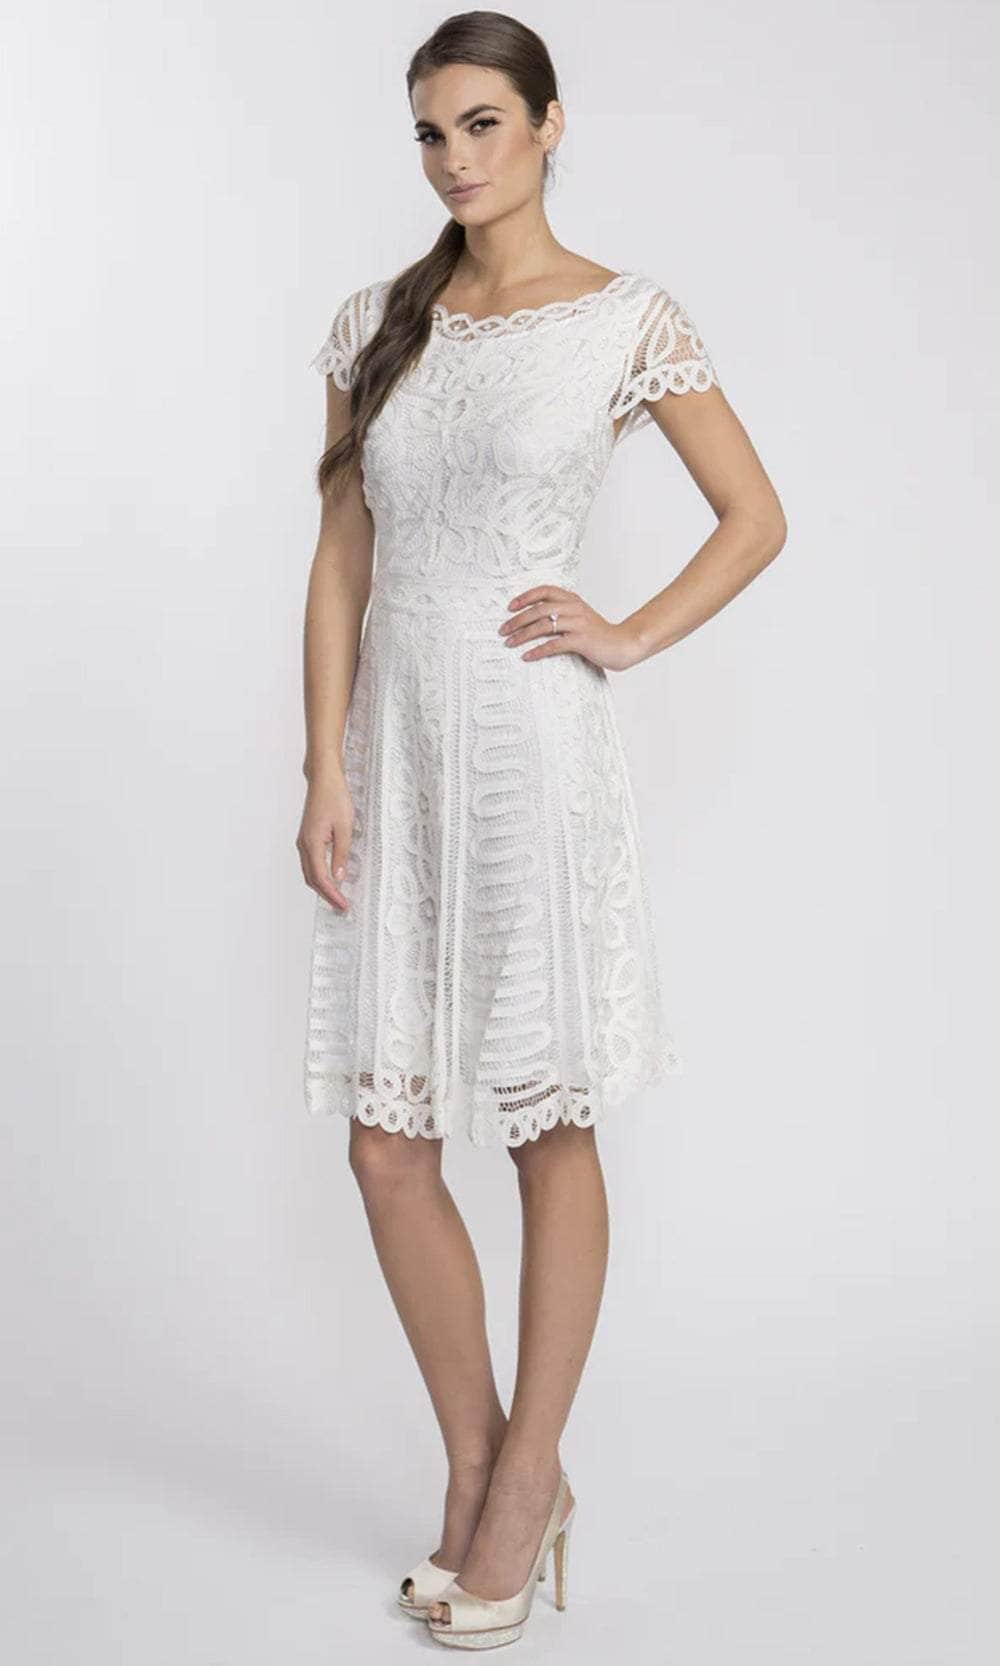 Soulmates D1319 - Hand Crochet Lace Wedding Party Bridal Shower Dress Cocktail Dresses Ivory / S